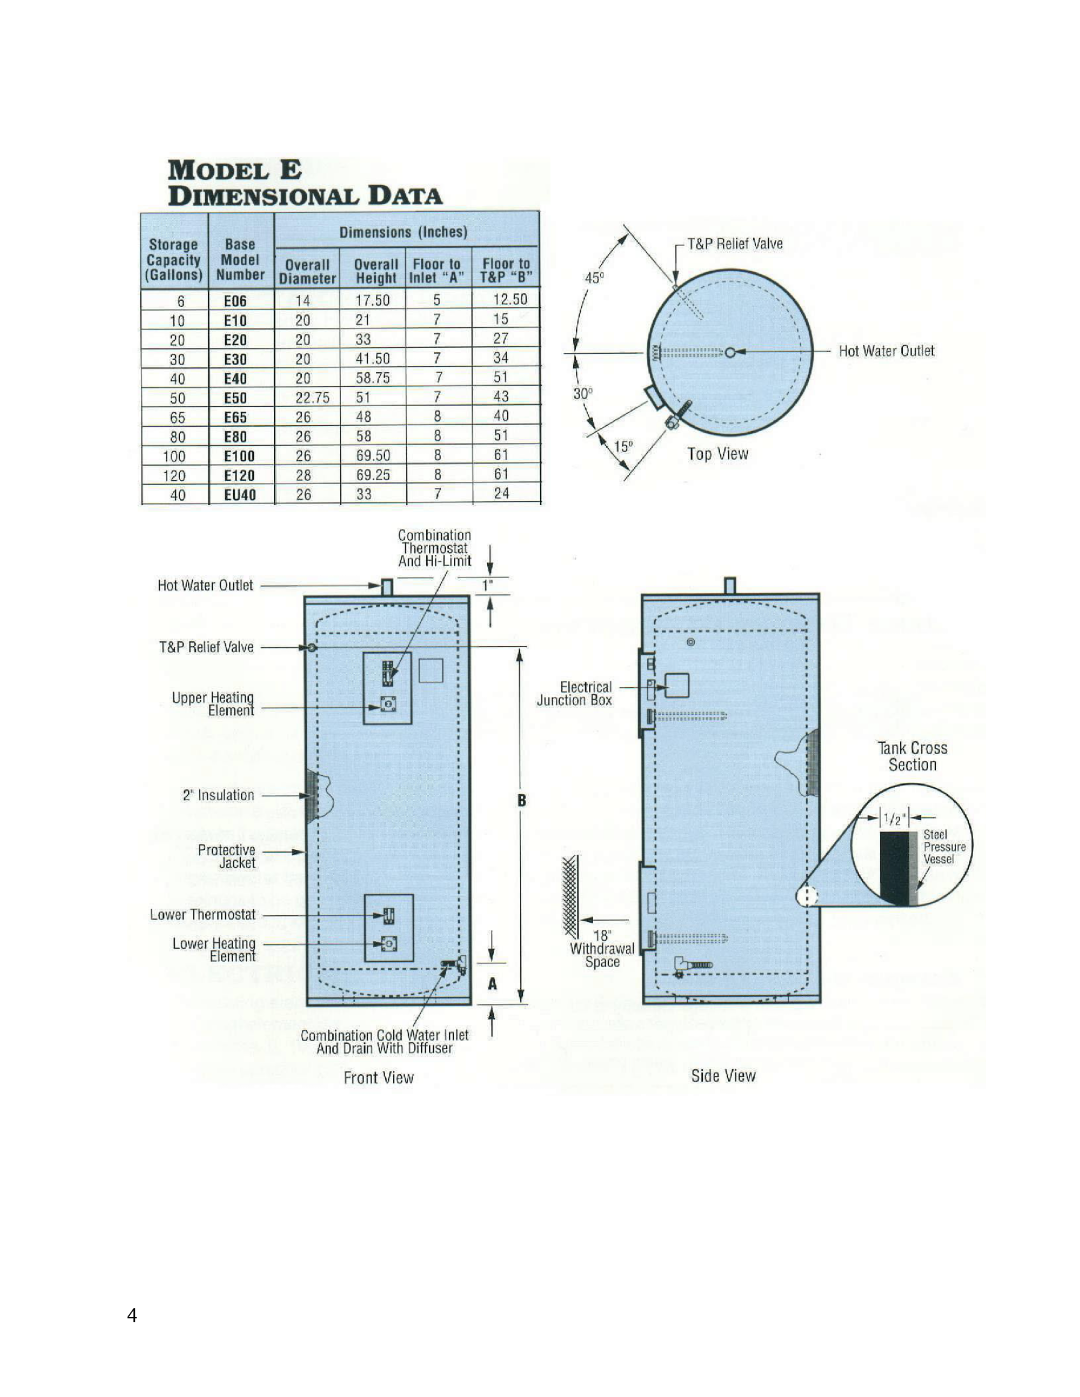 Hubbell Electric Heater Company E manual 